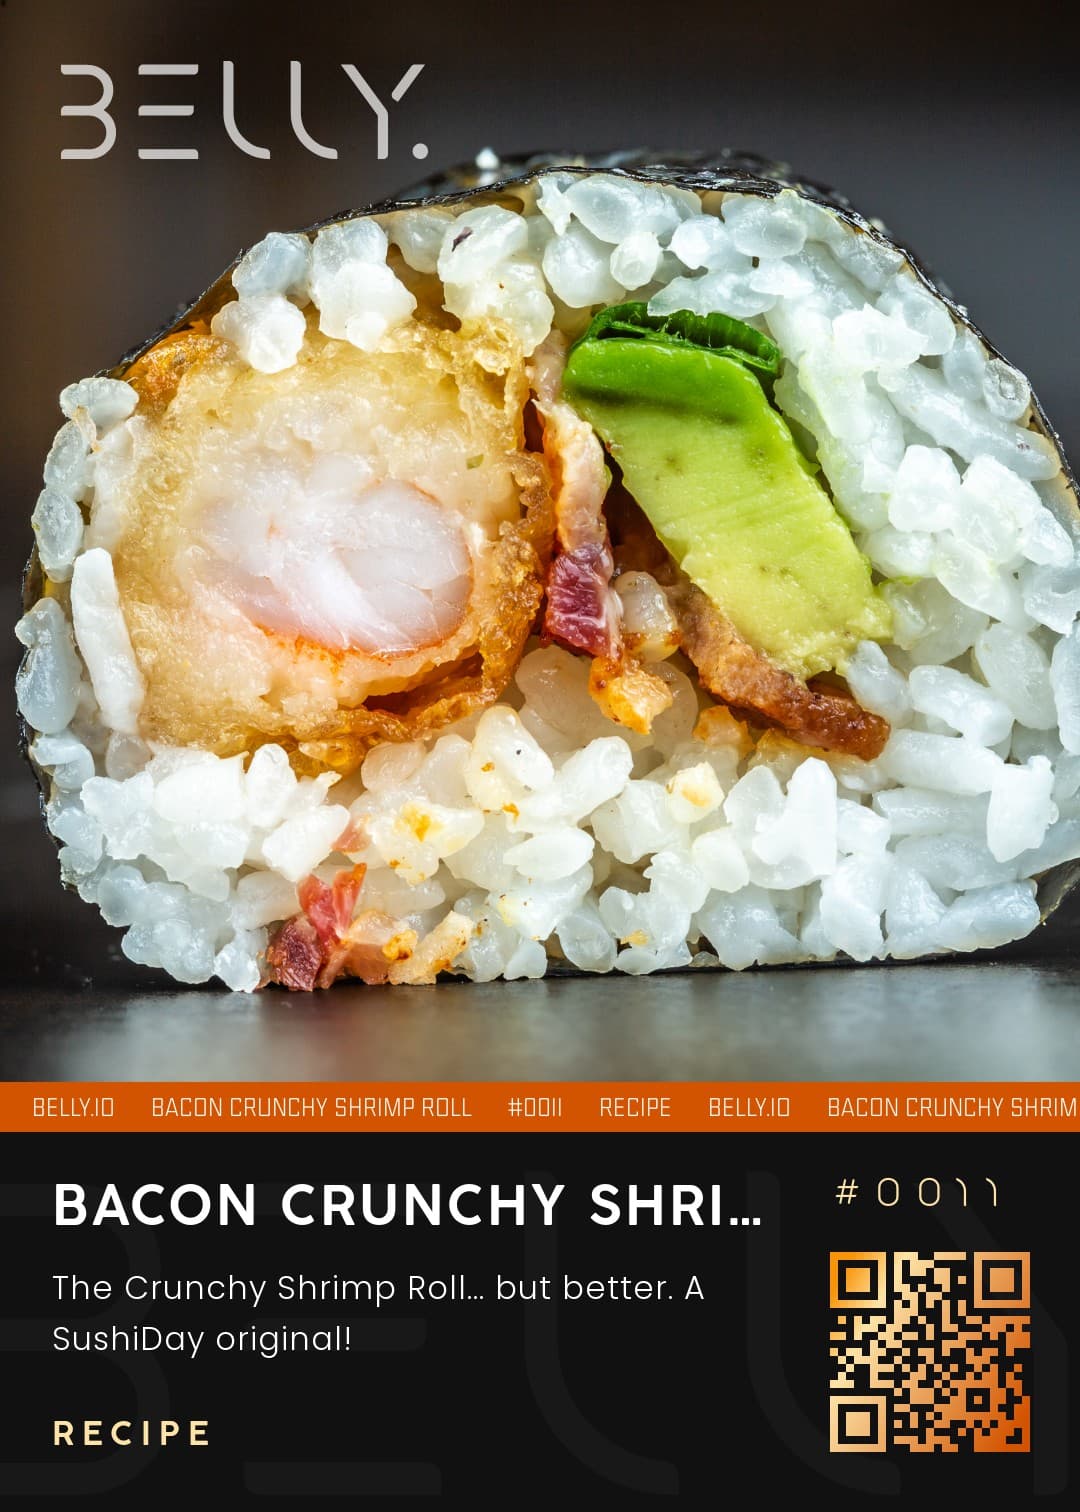 Bacon Crunchy Shrimp Roll - The Crunchy Shrimp Roll... but better. A SushiDay original!